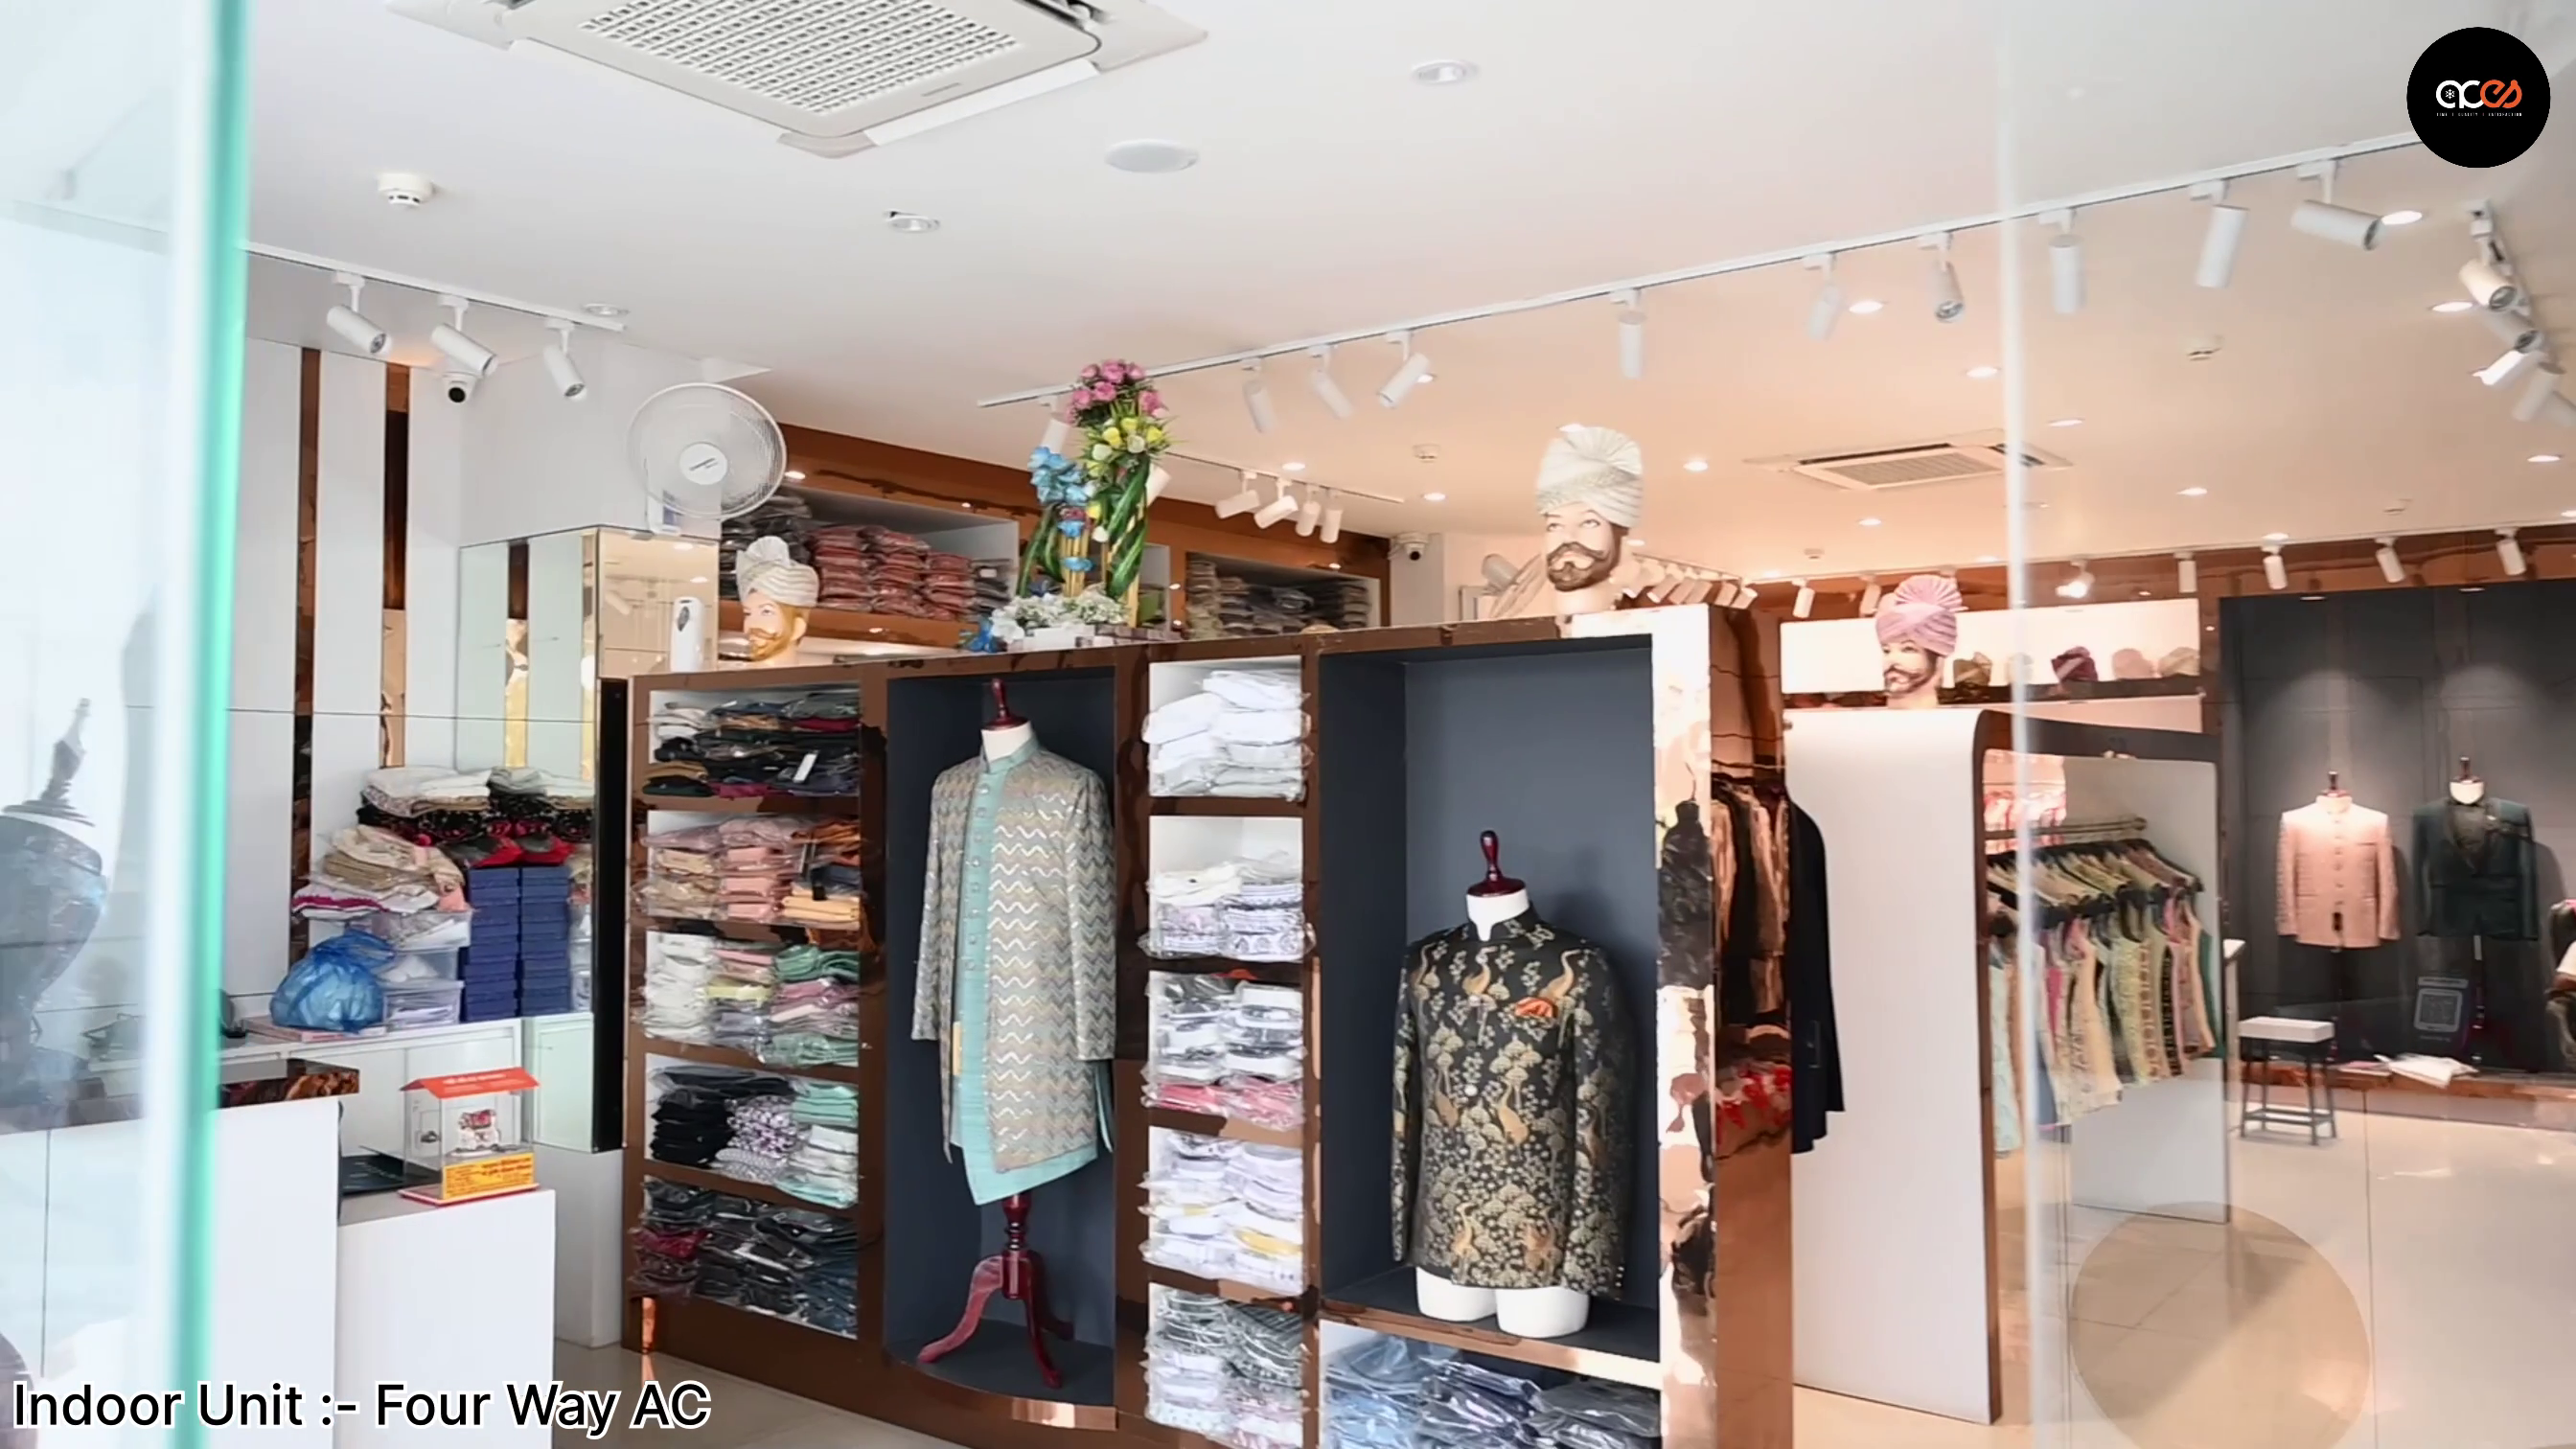 designer studio clothing retail store 4 way ac installed